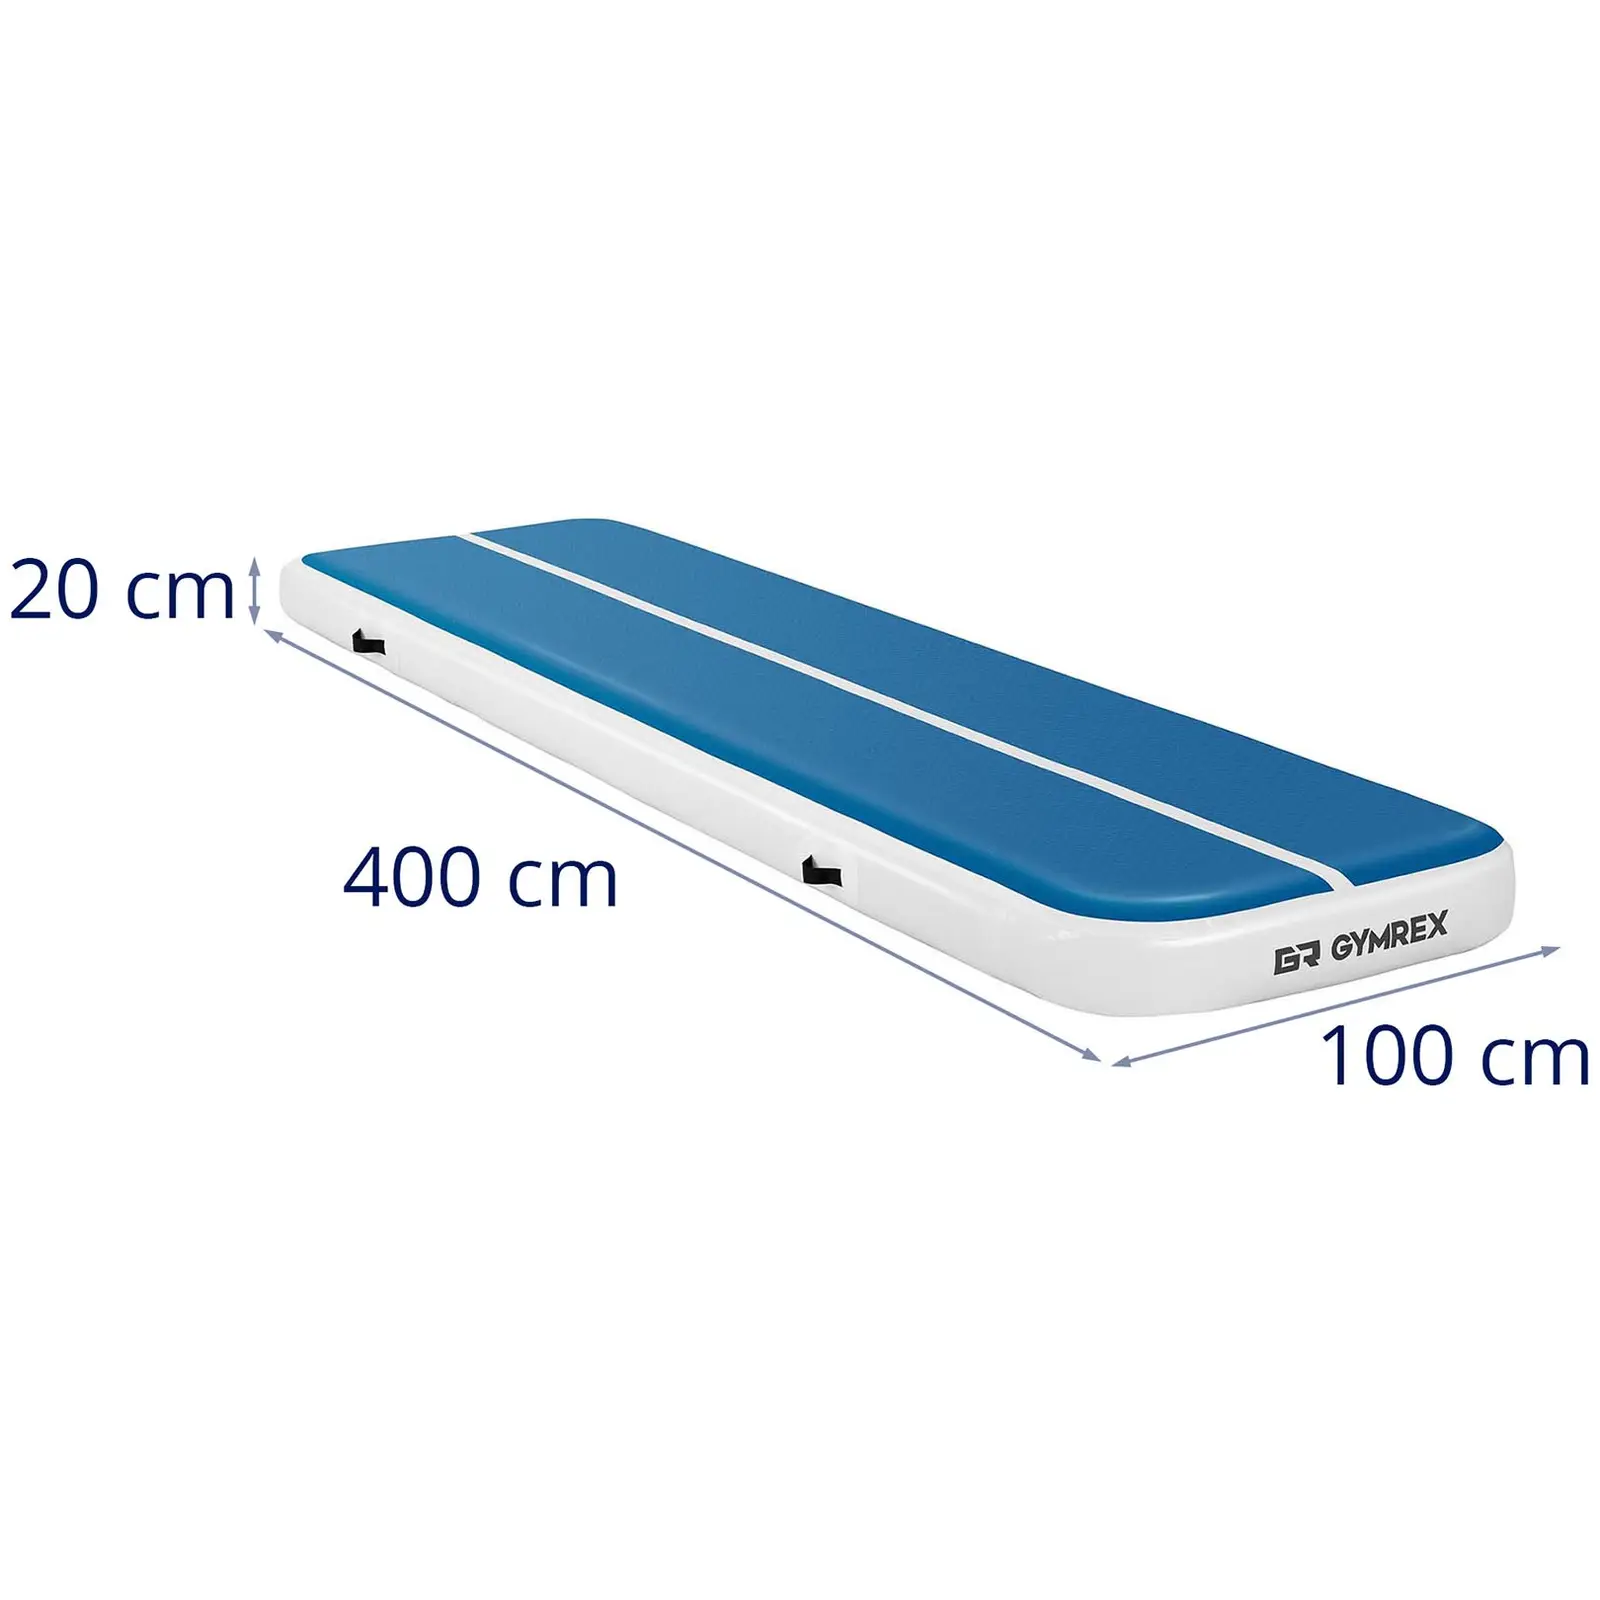 Set Aufblasbare Turnmatte inklusive Luftpumpe - 400 x 100 x 20 cm - 200 kg - blau/weiß